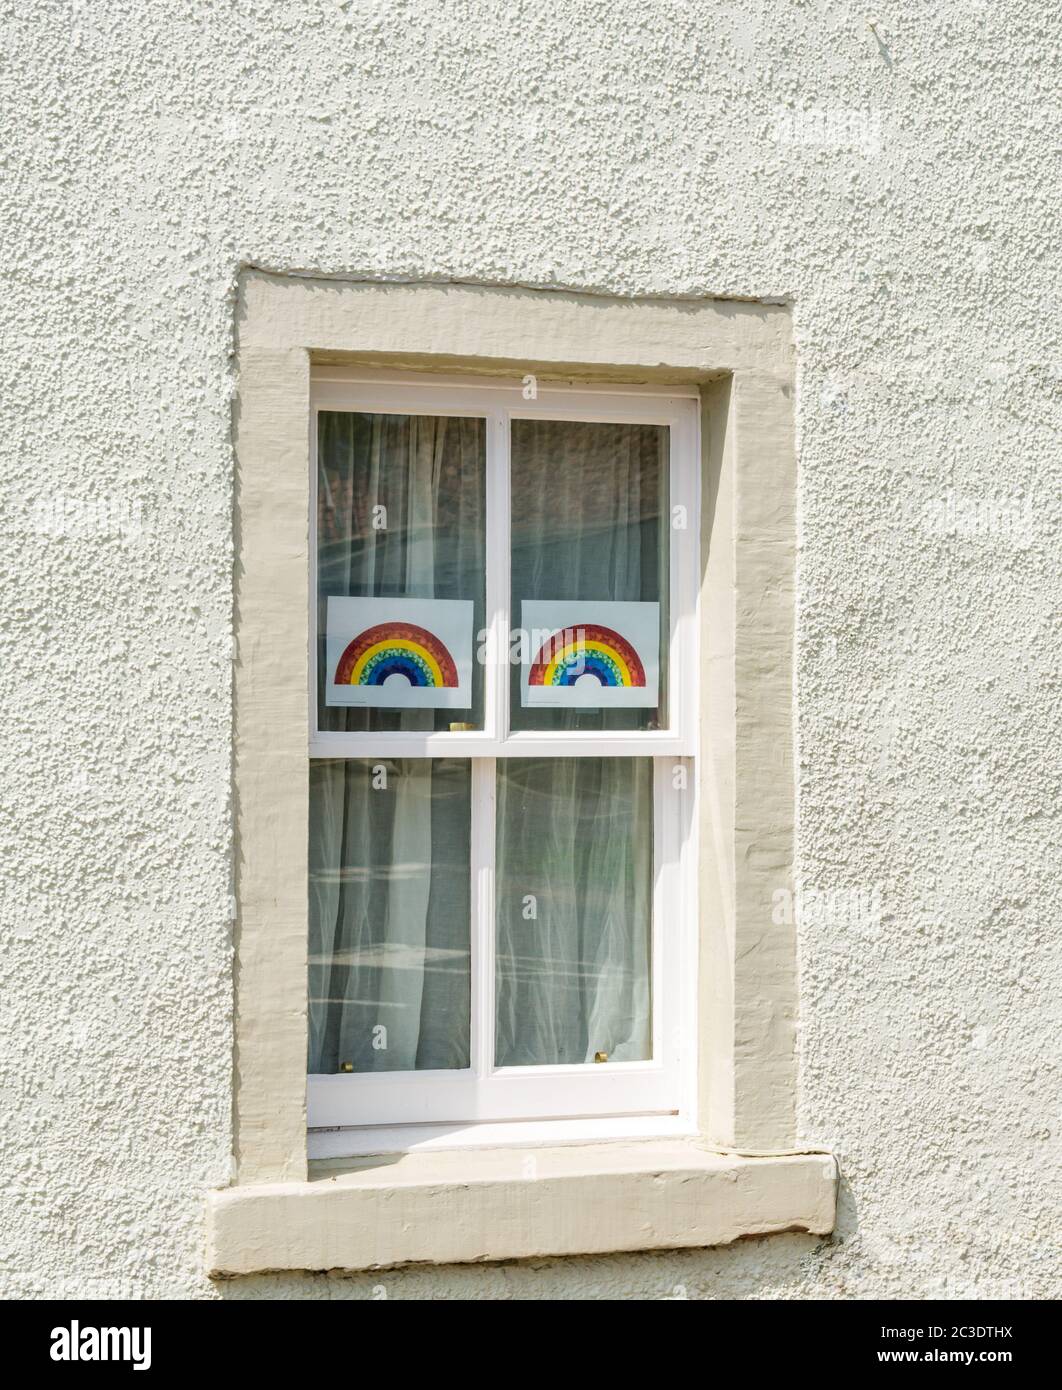 Rainbow drawings in house window during Covid-9 Coronavirus pandemic as symbol of hop, Gifford, East Lothian, Scotland, UK Stock Photo